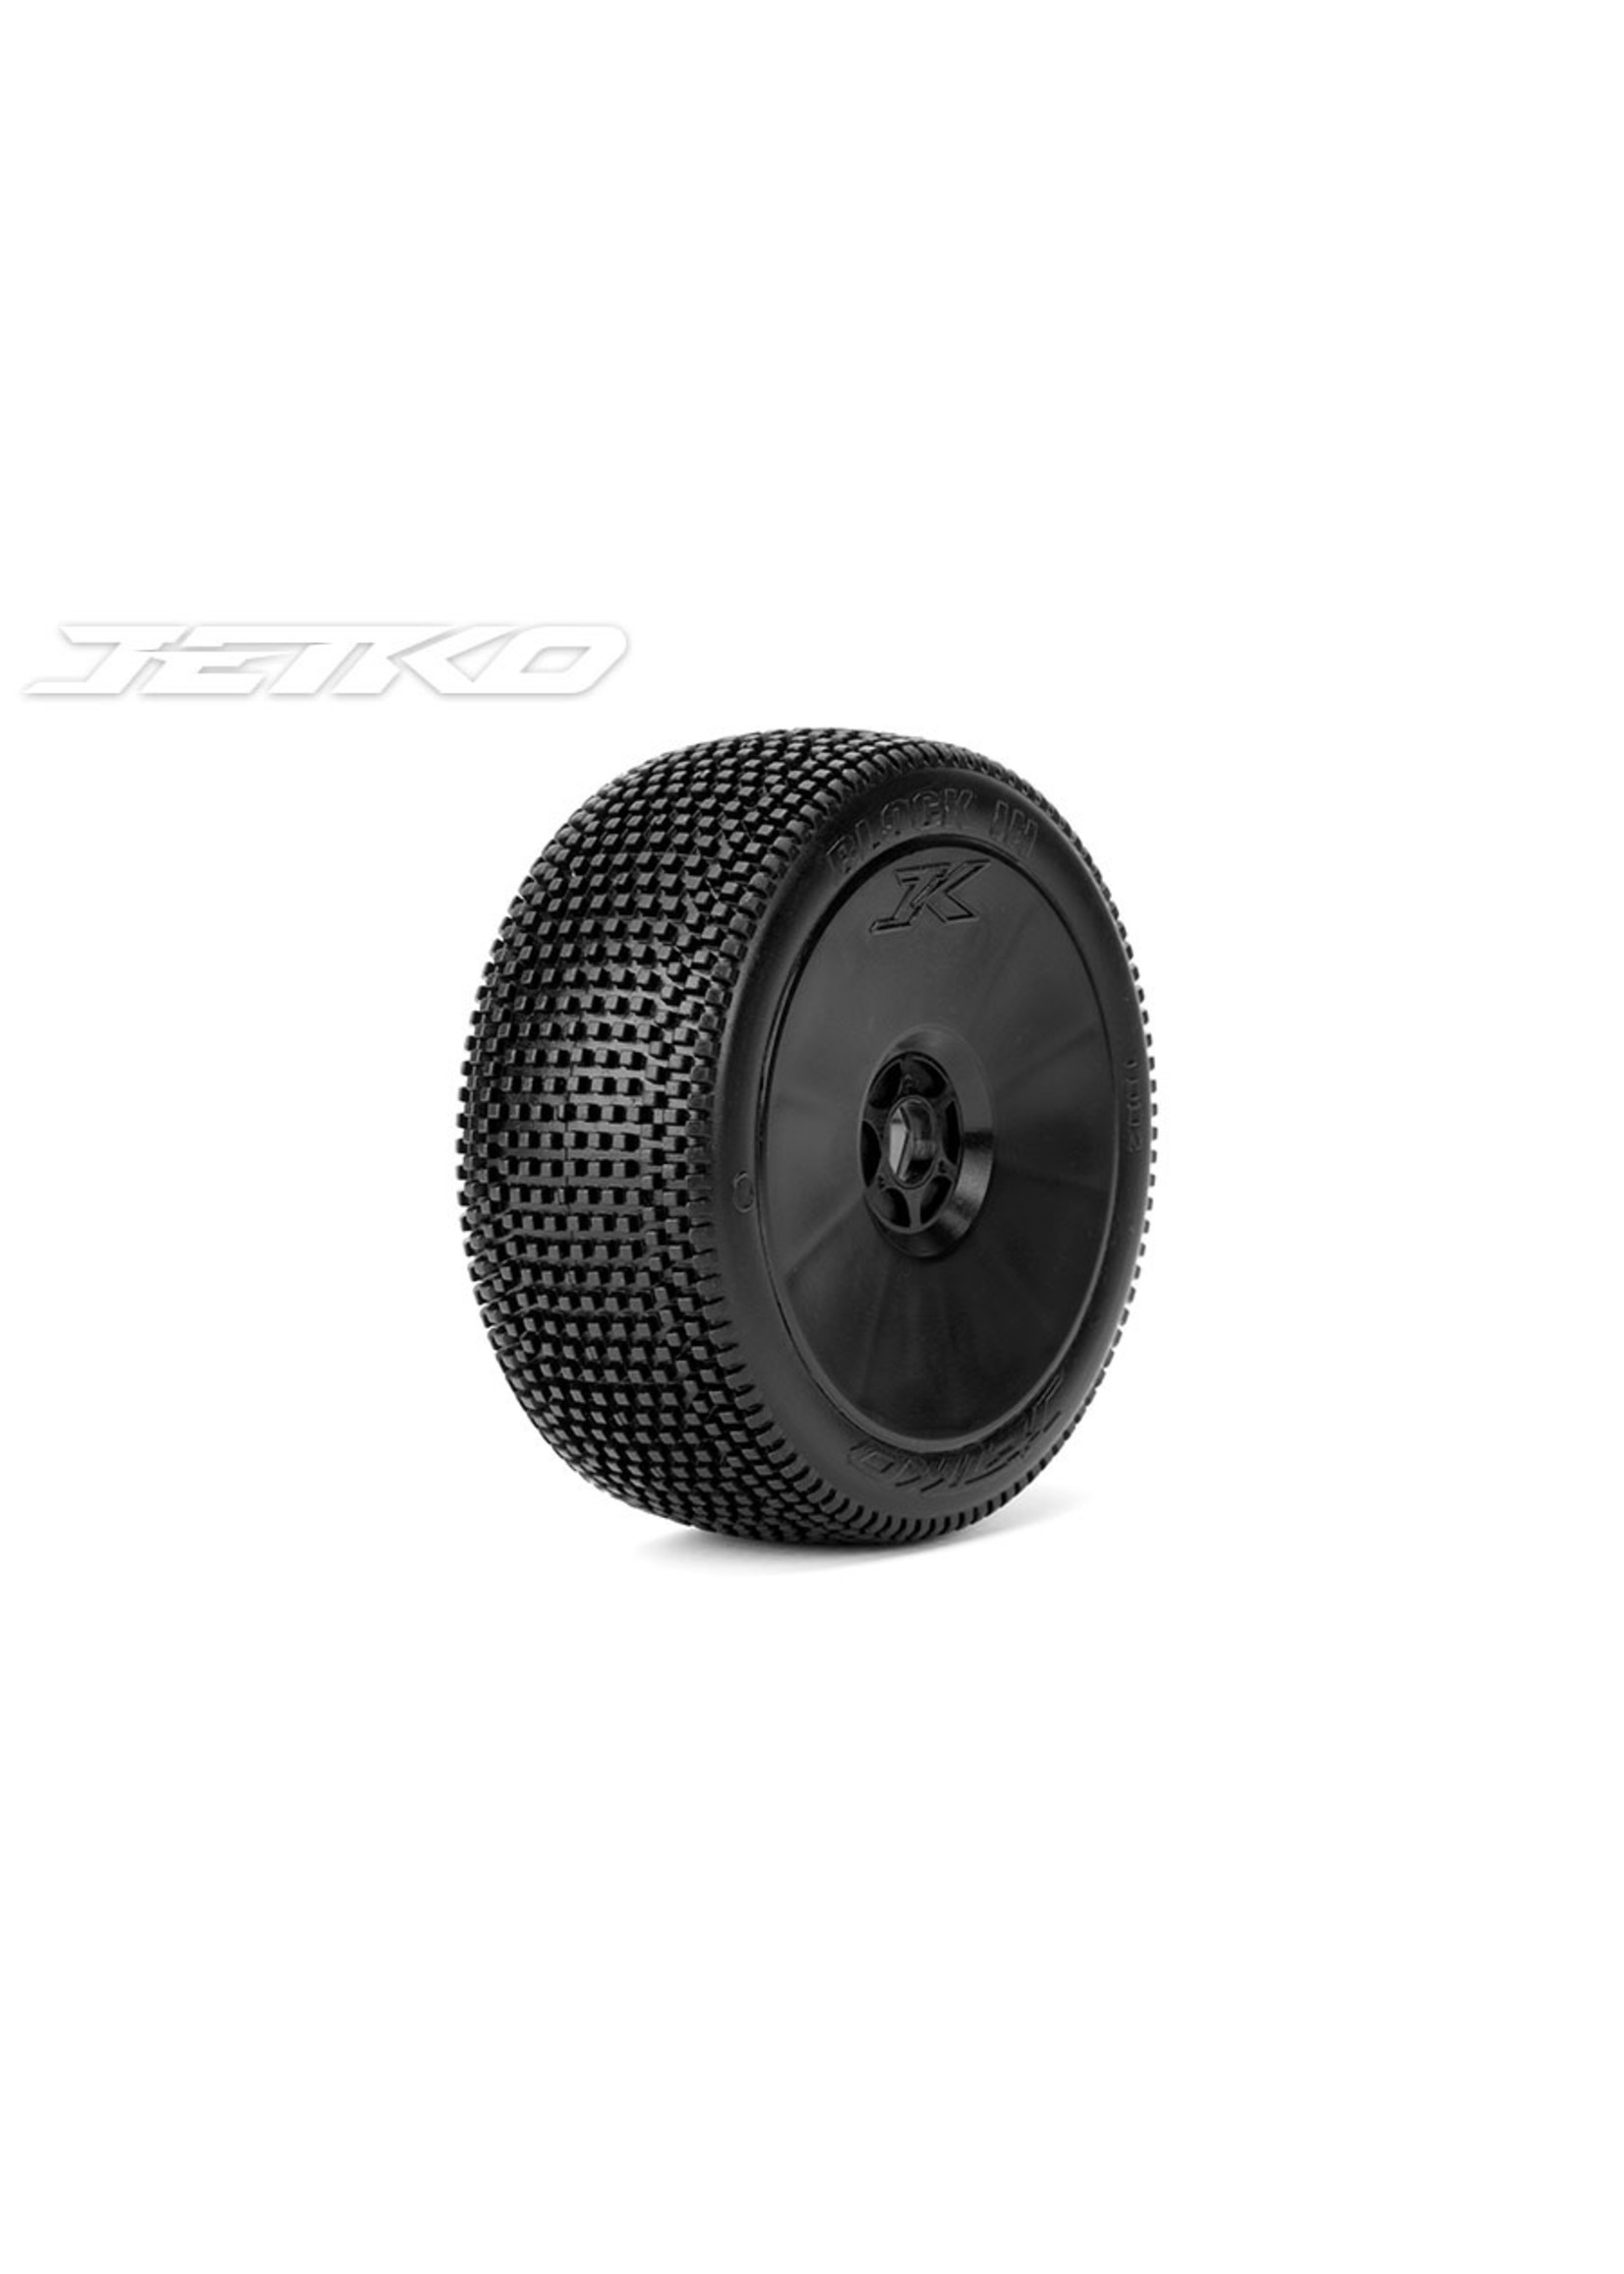 Jetko JKO1002DBUSG Jetko Block In 1/8 Buggy Tires Mounted on Black Dish Rims, Ultra Soft (2)